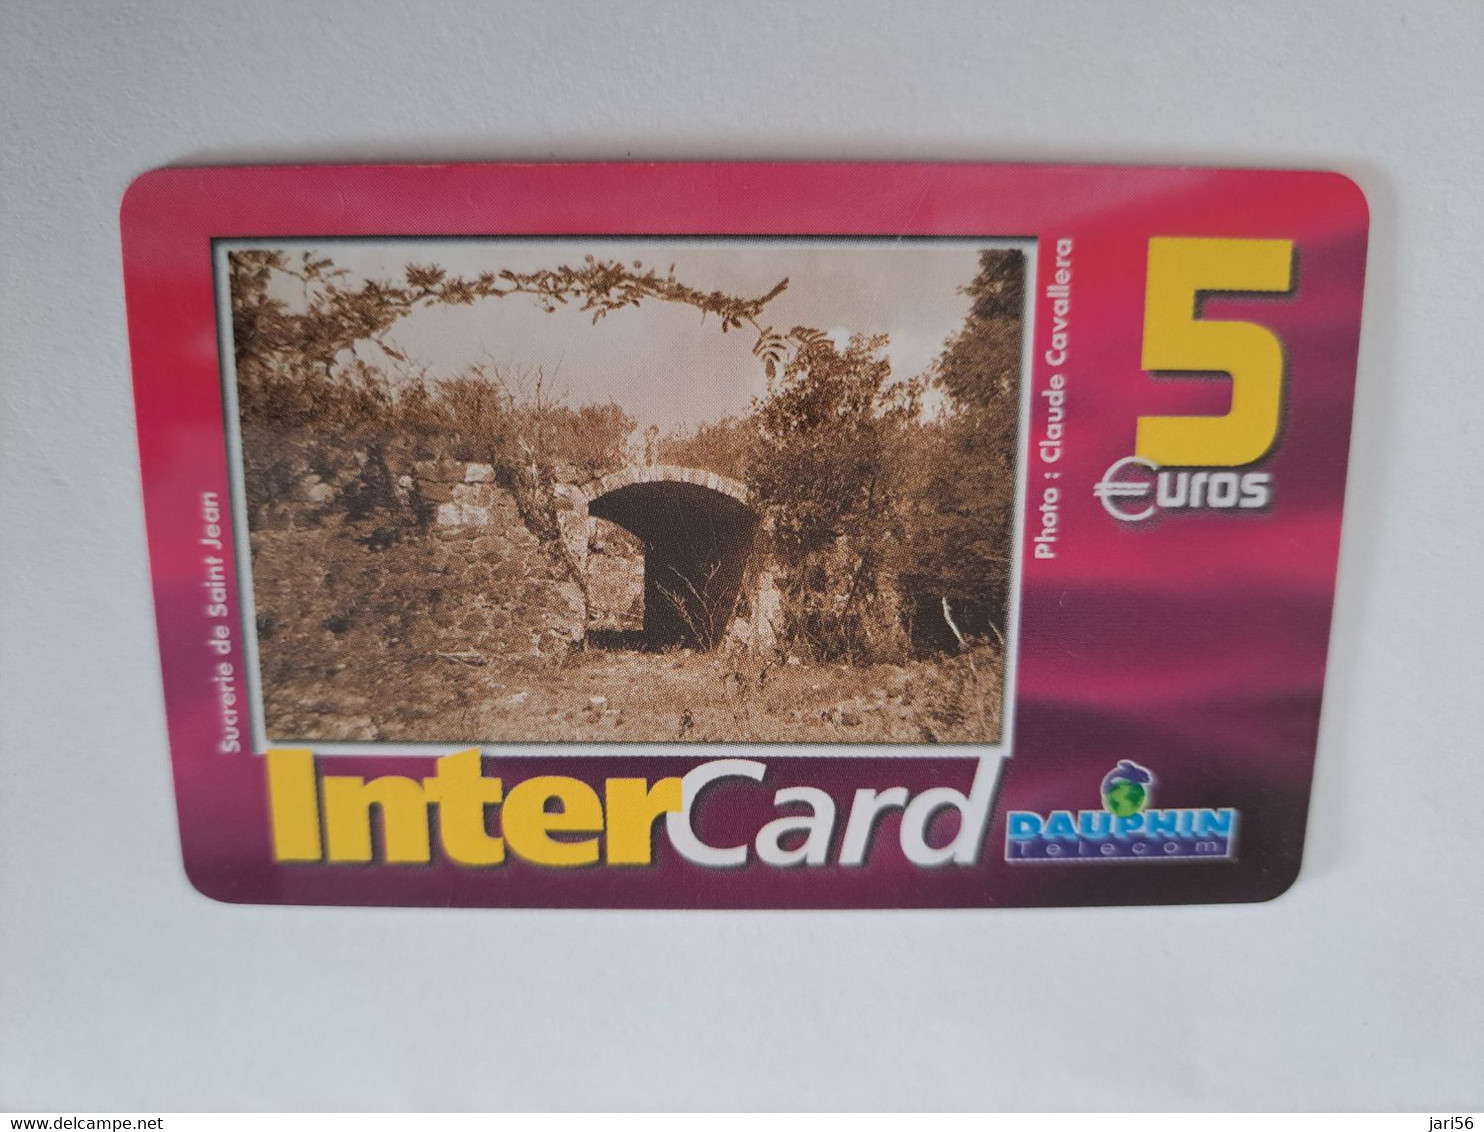 ST MARTIN / INTERCARD  5 EURO  SUCRERIE DE SAINT JEAN           NO 105 Fine Used Card    ** 10910** - Antillen (Frans)